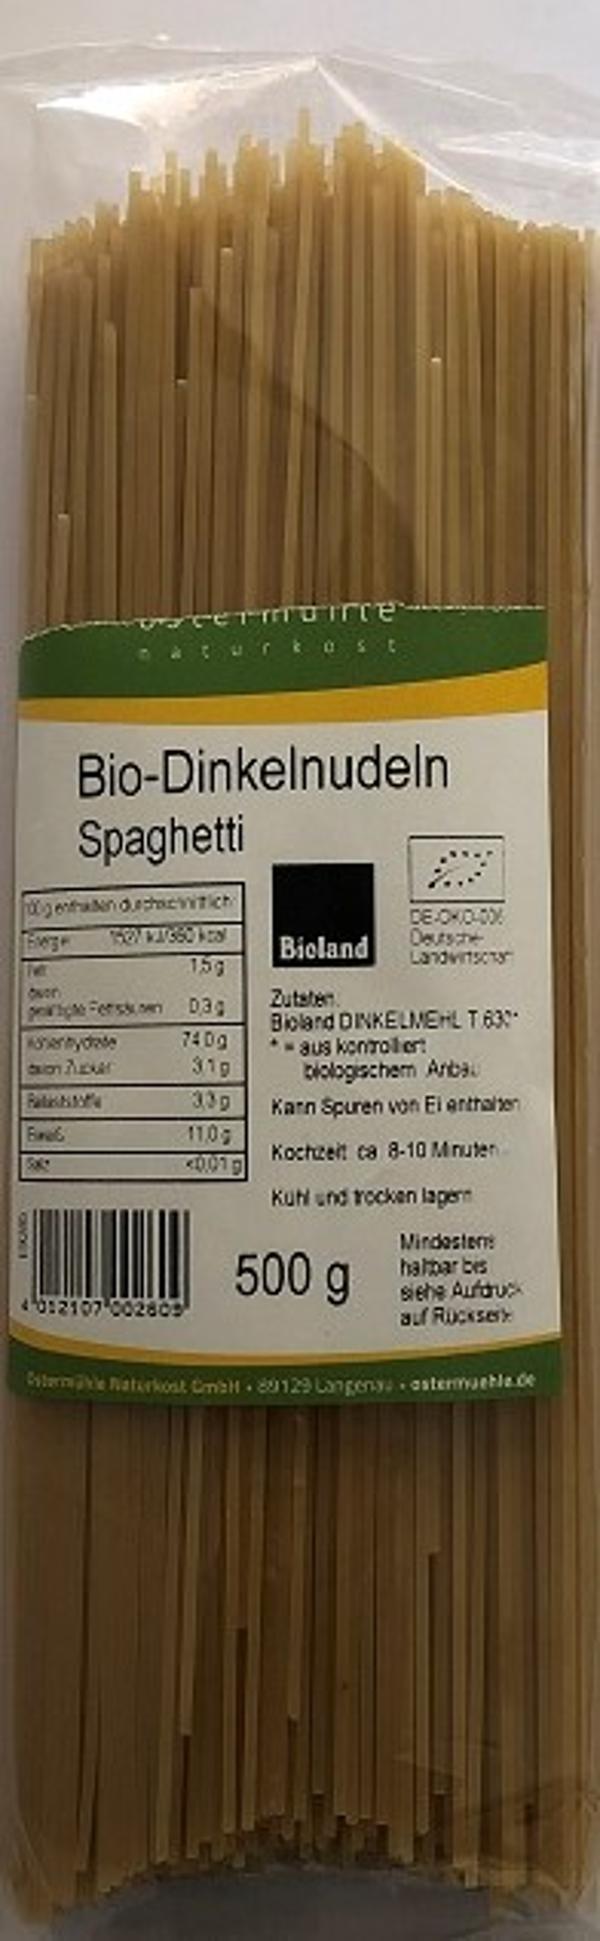 Produktfoto zu Spaghetti Dinkel 500g